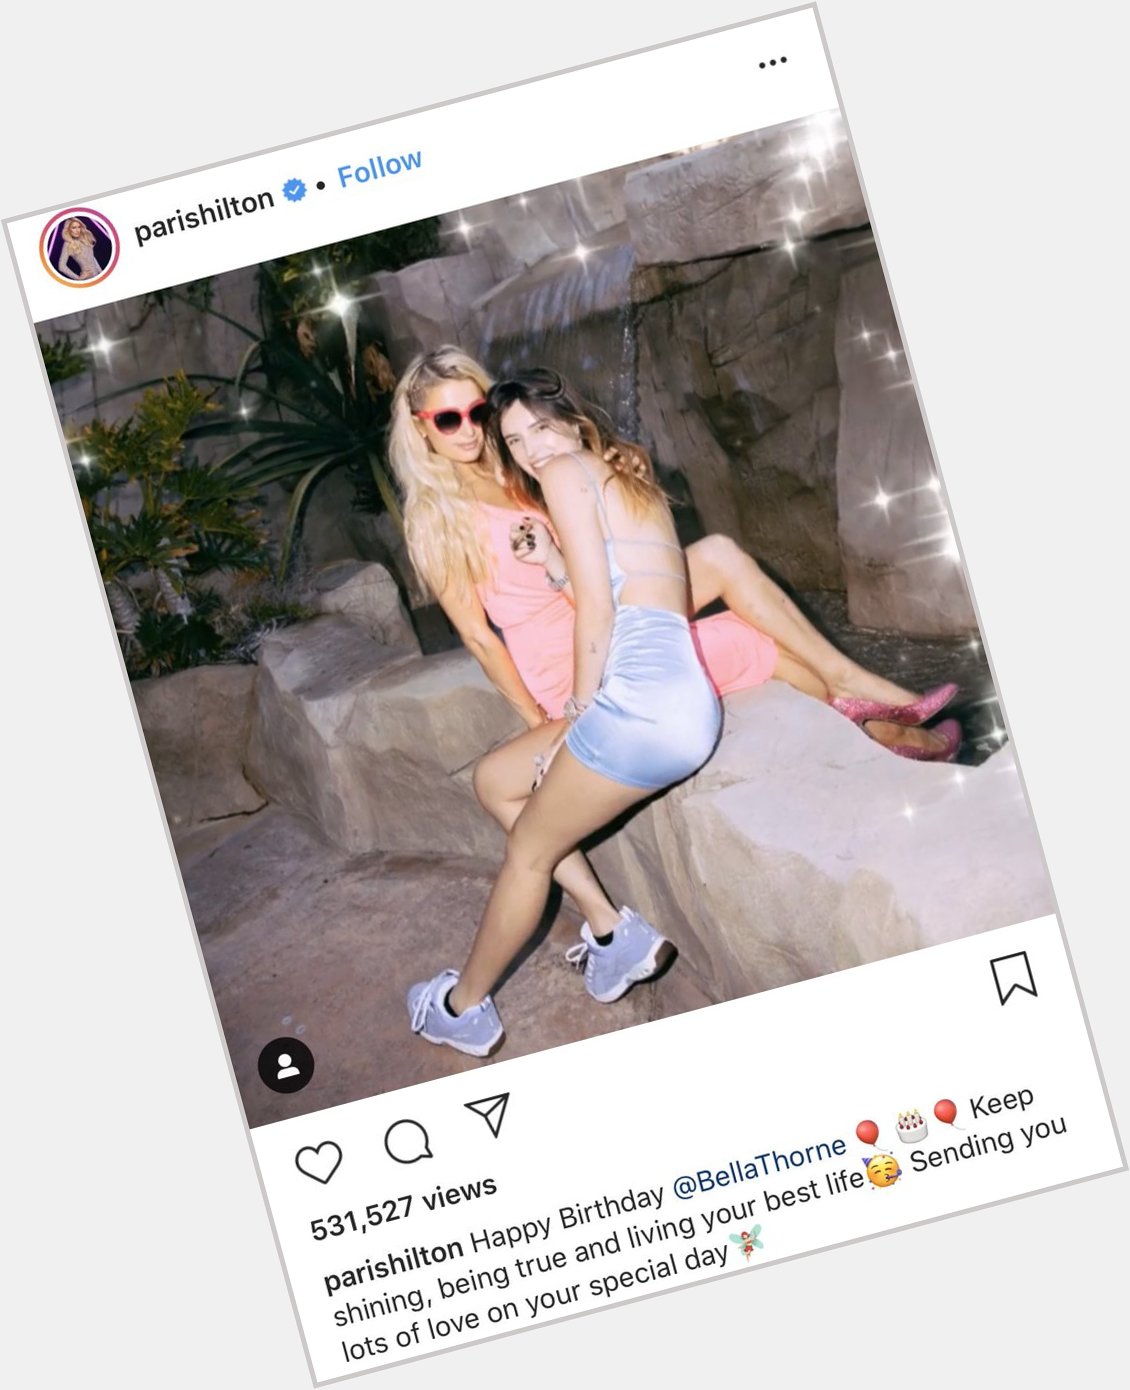 Paris Hilton wishes Bella Thorne a happy birthday via Instagram 